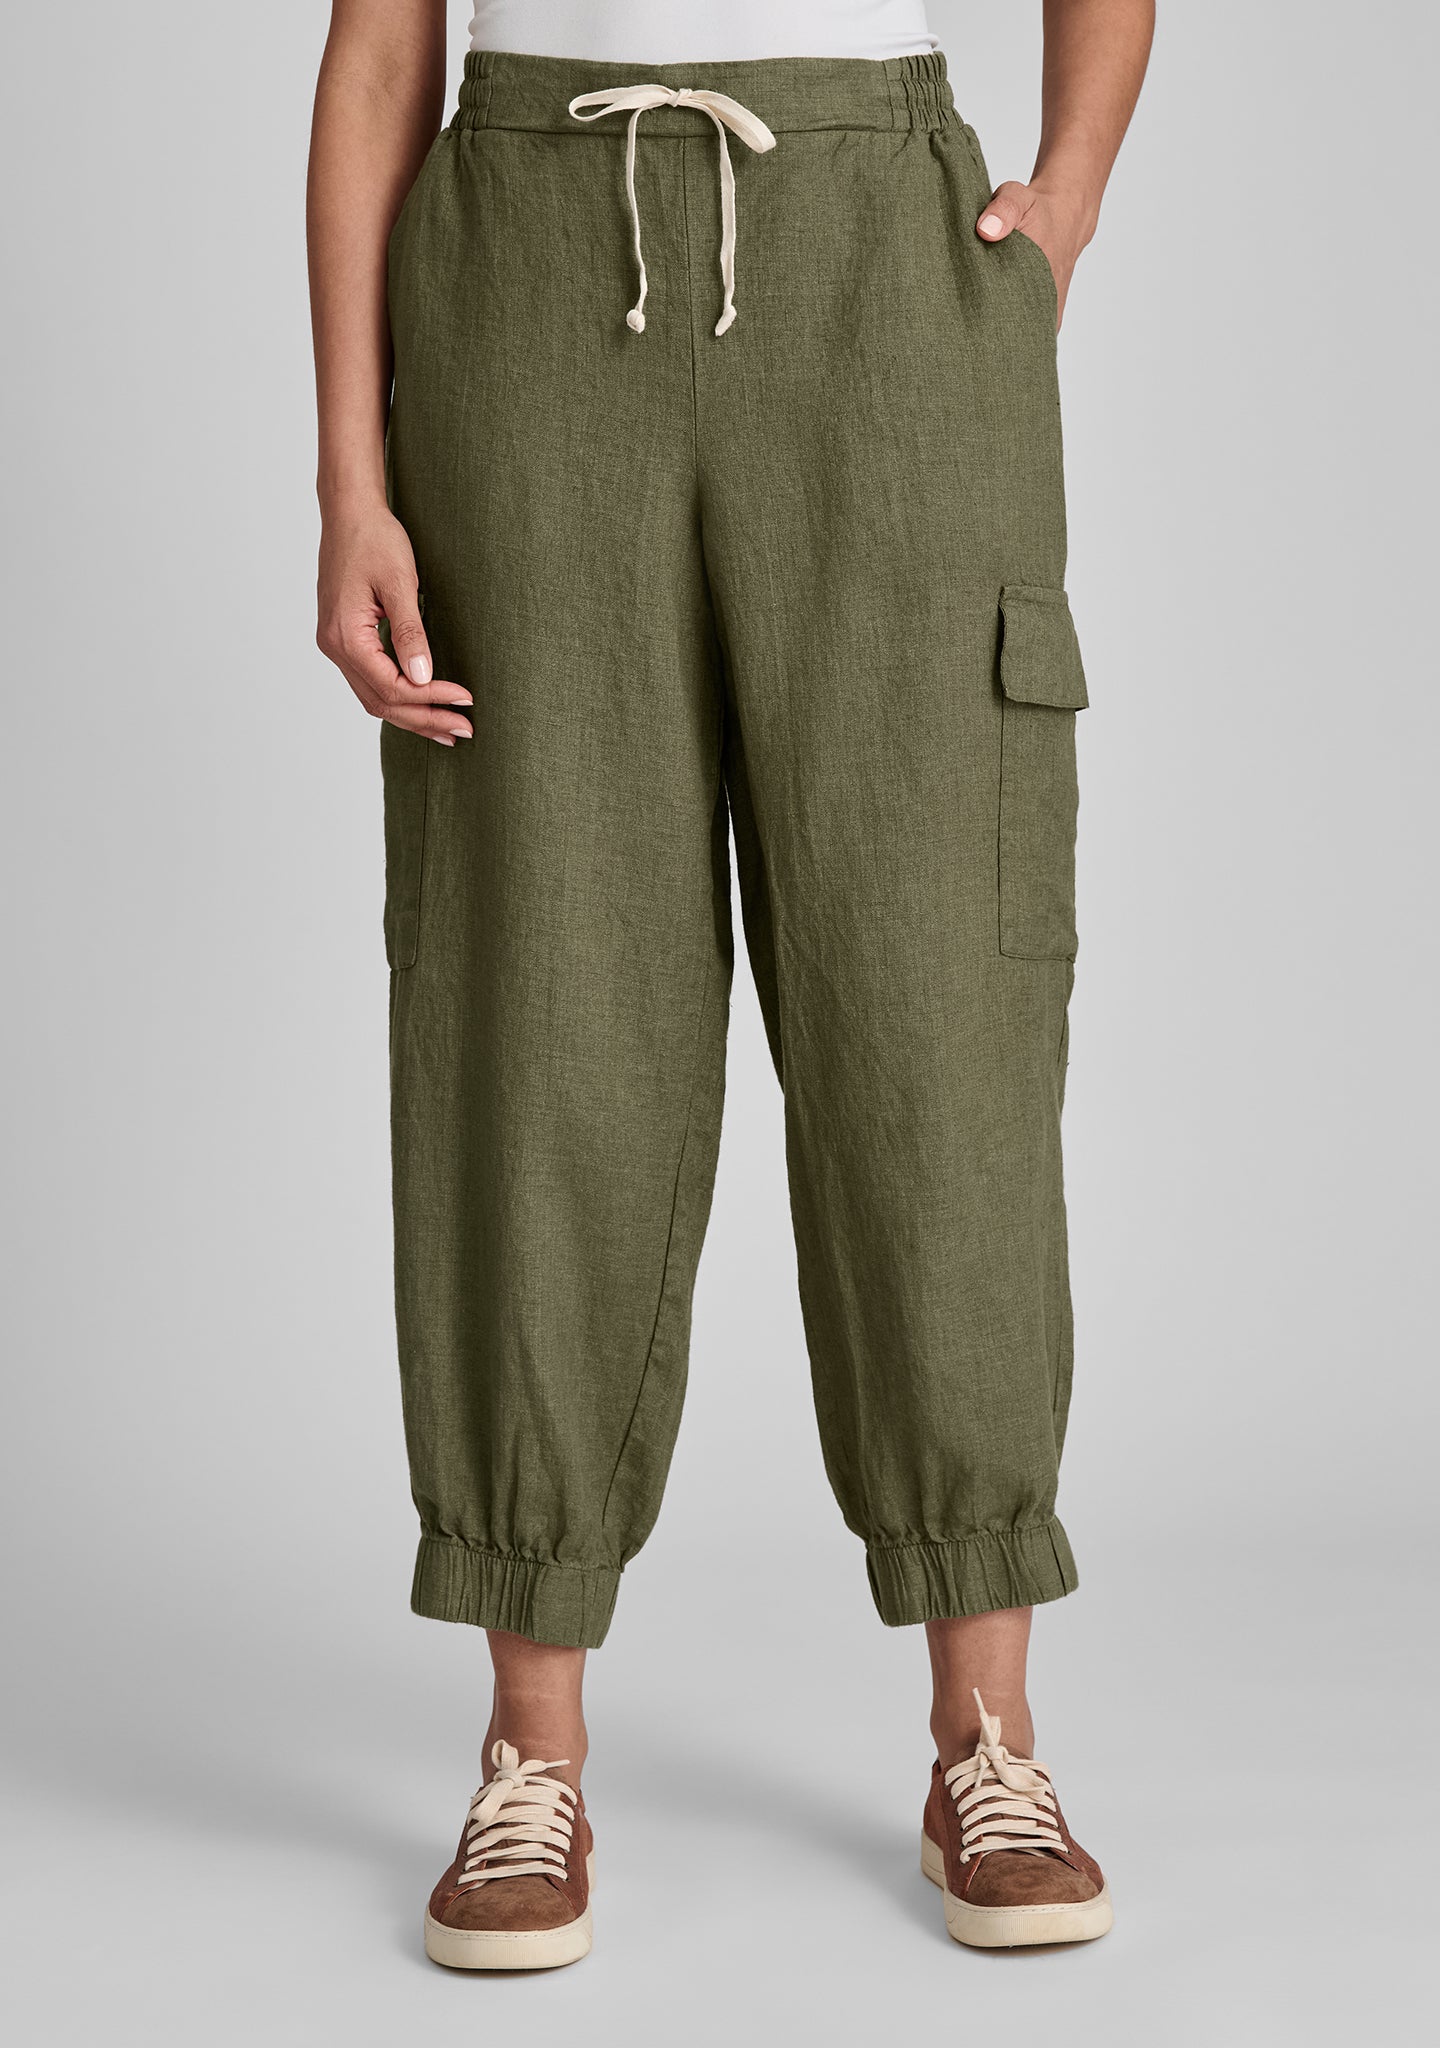 nifty pant linen drawstring pants details